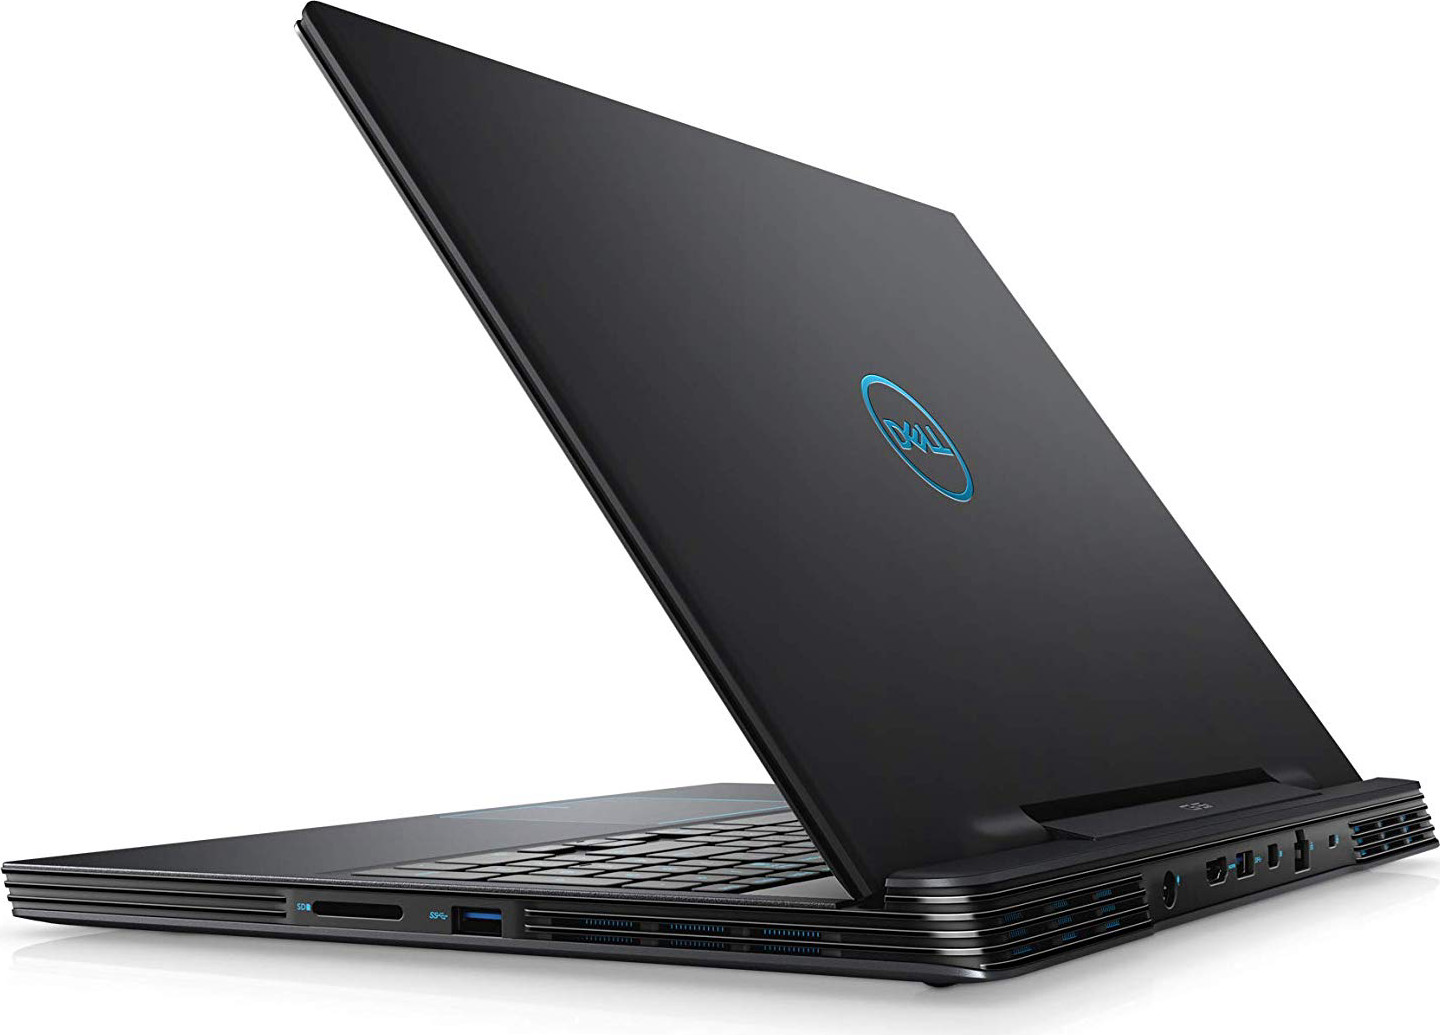 Dell G5 15 Gaming Laptop (Windows 10 Home, 9th Gen Intel Core i7-9750H, NVIDIA GTX 1650, 15.6" FHD LCD Screen, 256GB SSD and 1TB SATA, 16 GB RAM) G5590-7679BLK-PUS